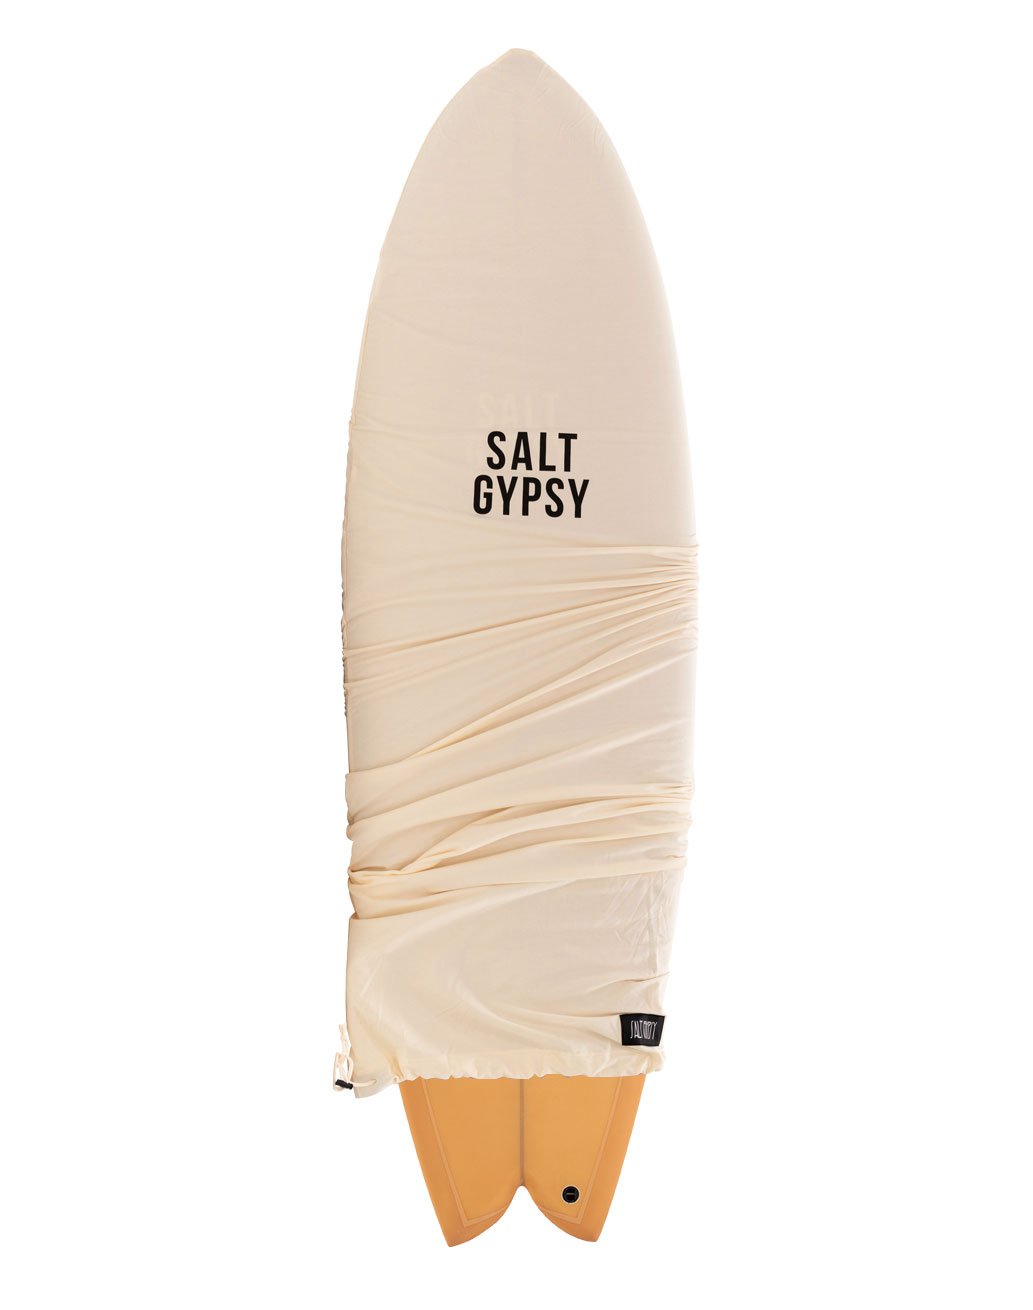 Salt Gypsy - Shorebird - mustard coloured twin fin surfboard